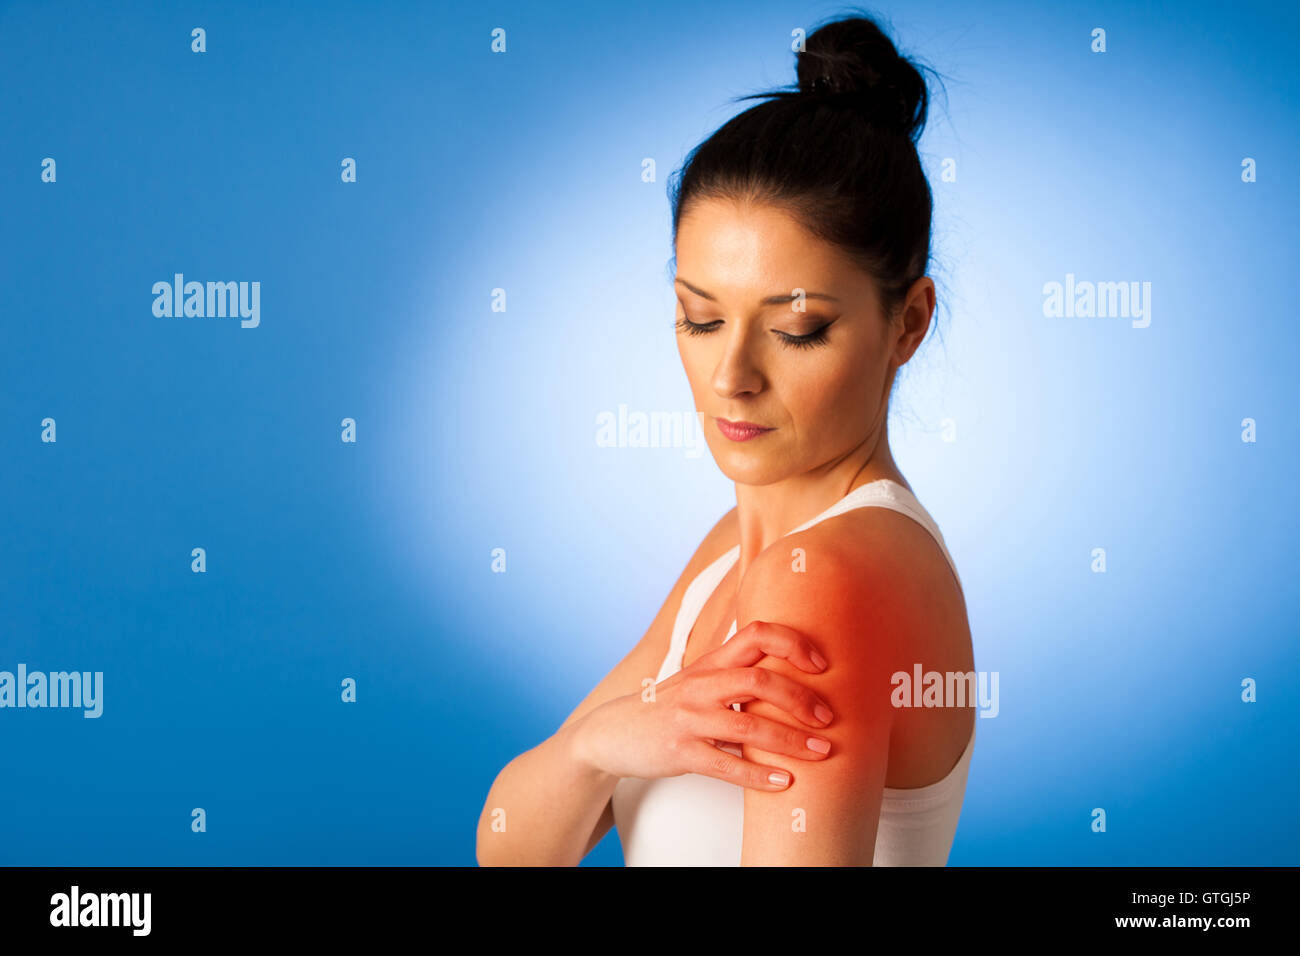 Beautiful woman having pain in her shoulder - injury Stock Photo